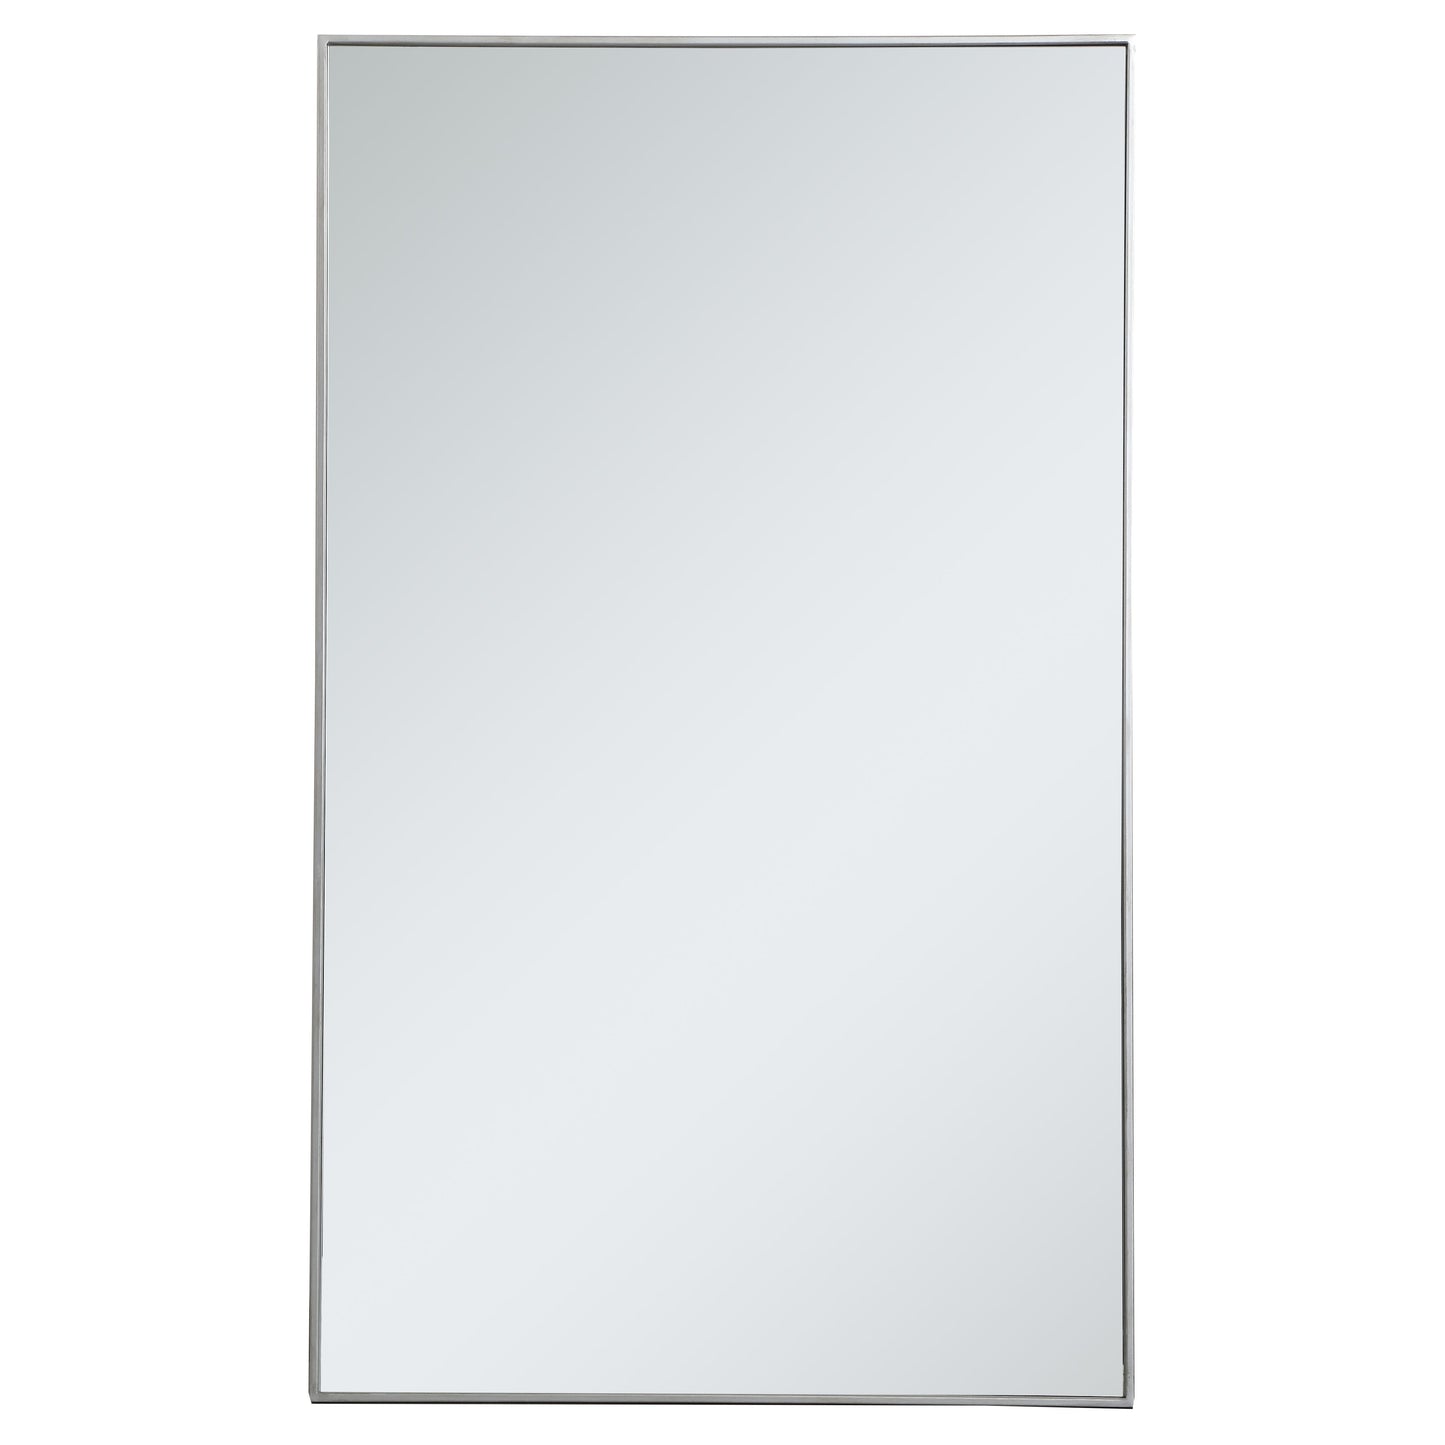 MR43660S Monet 36" x 60" Metal Framed Rectangular Mirror in Silver